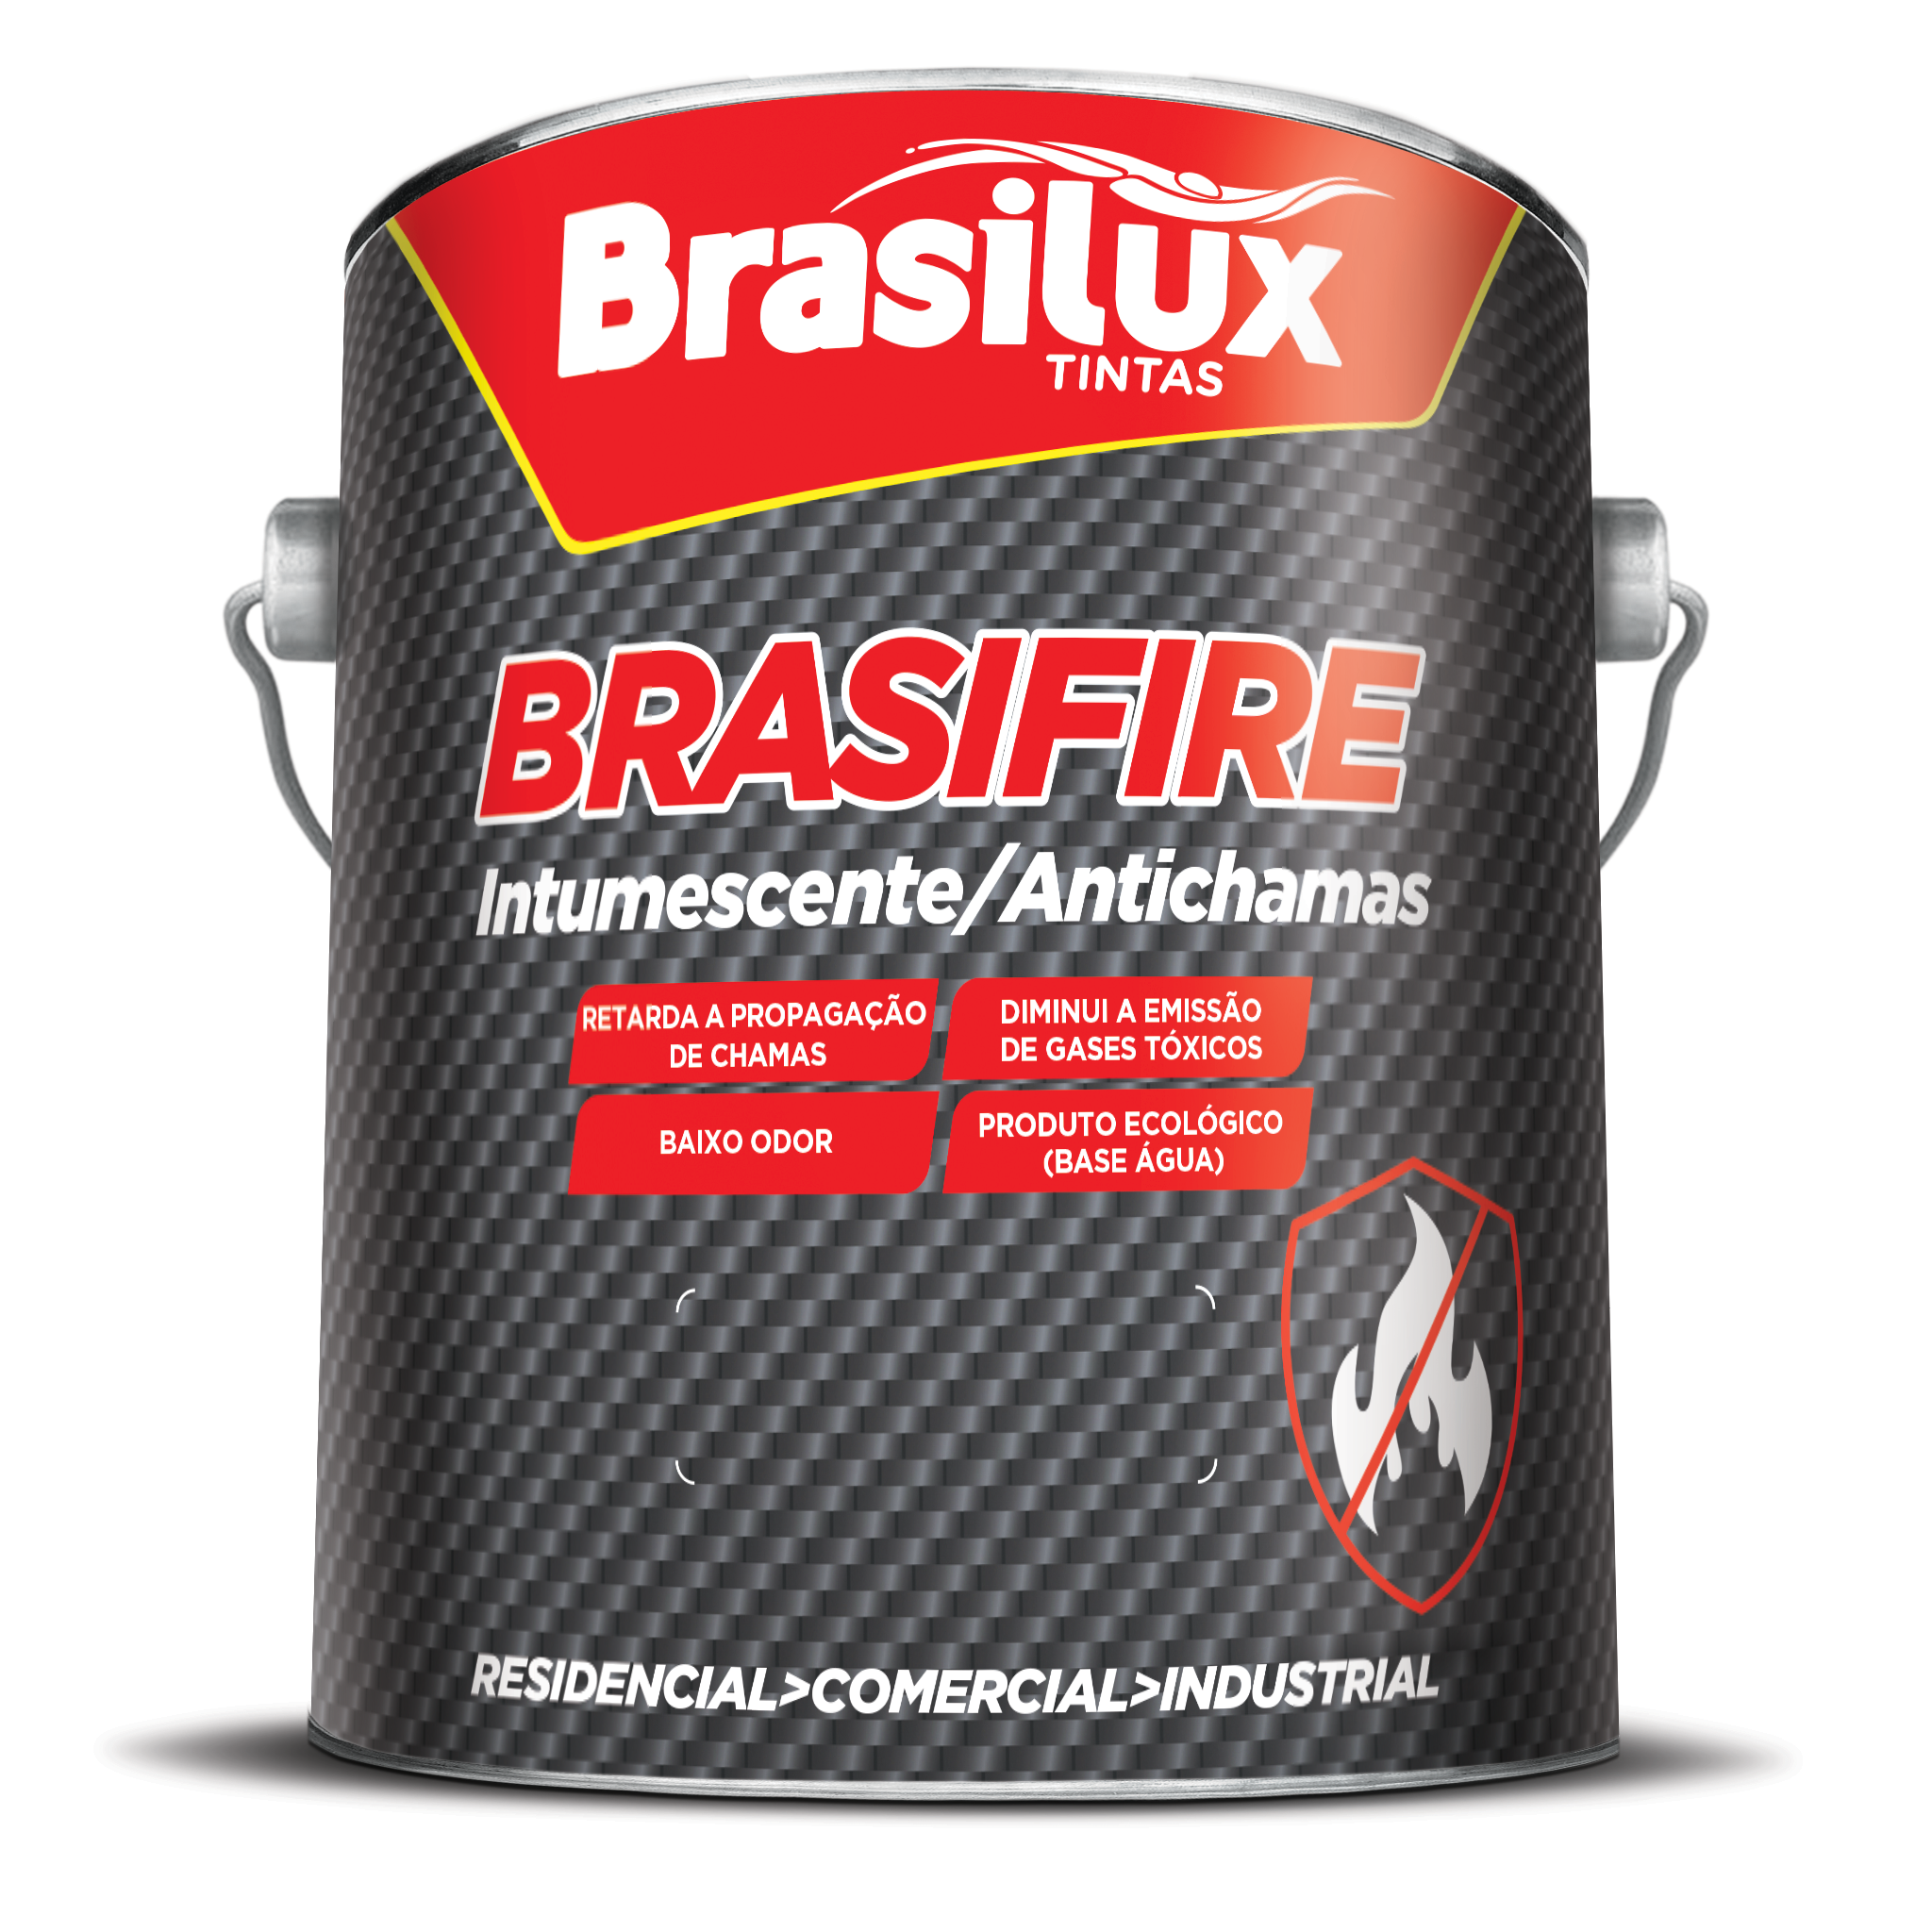 Brasifire – Intumescente/Antichamas